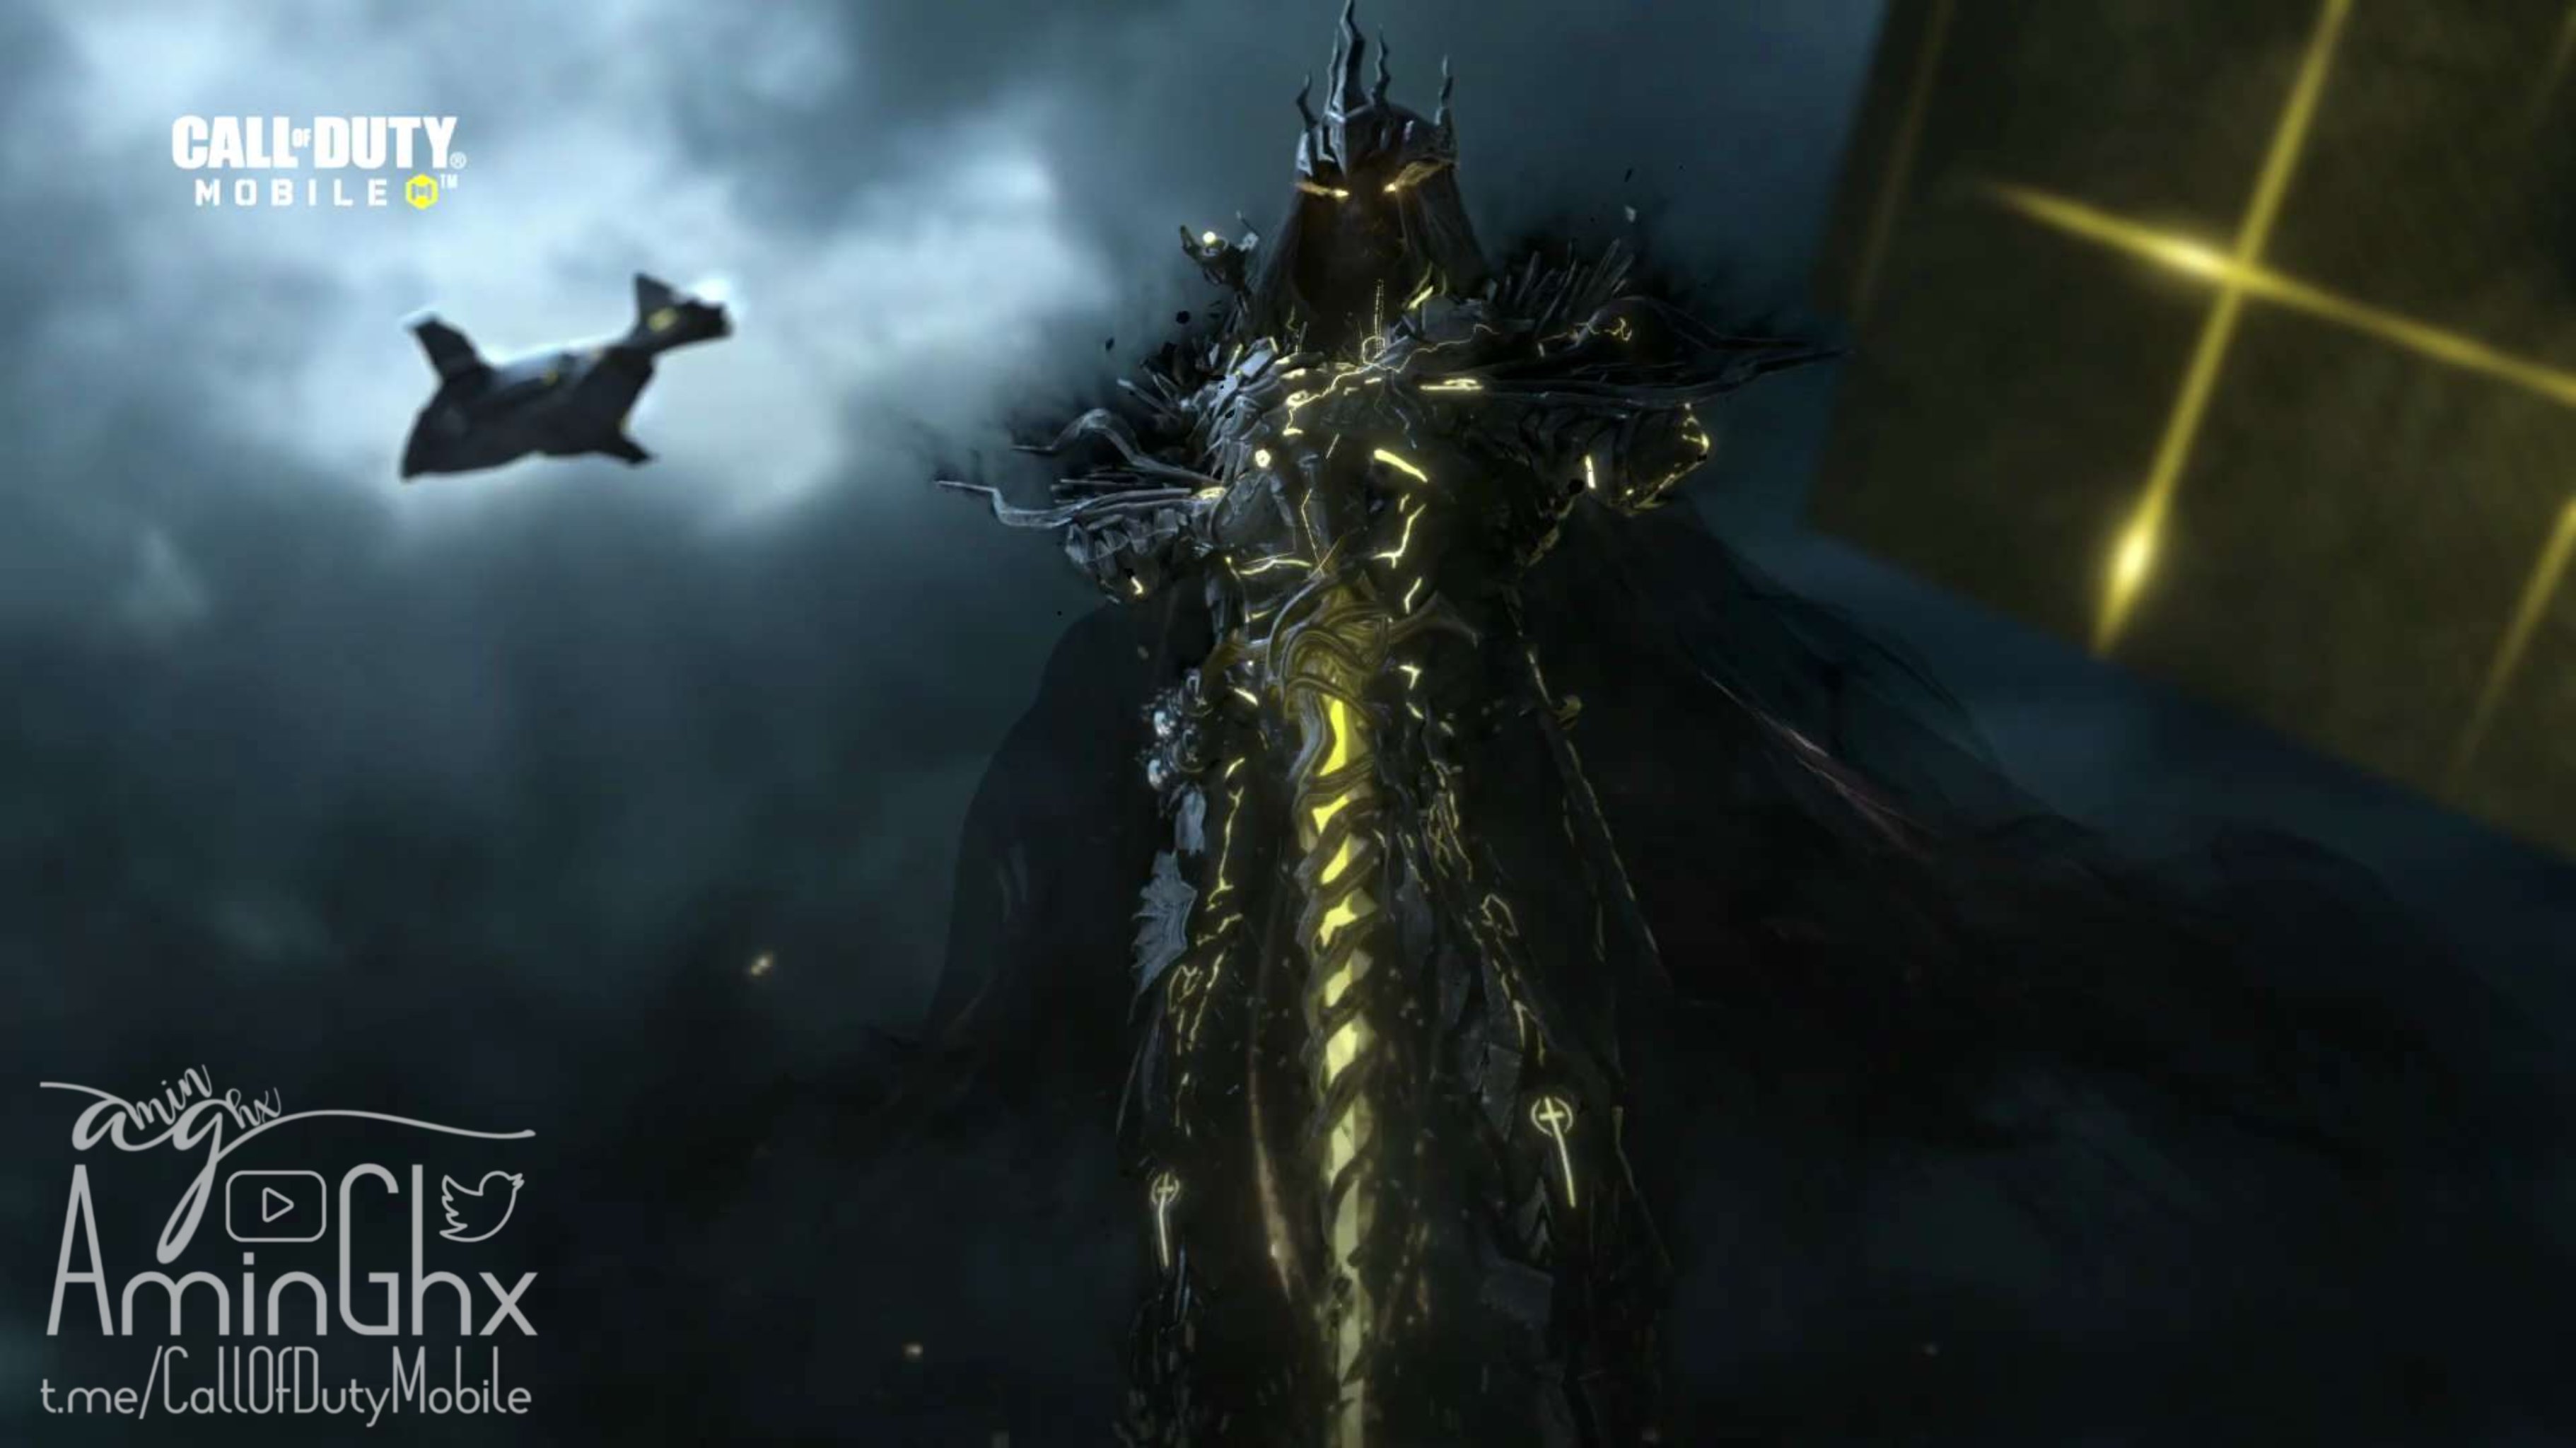 The King Returns in Call of Duty: Mobile Season 6 — Templar's Oath